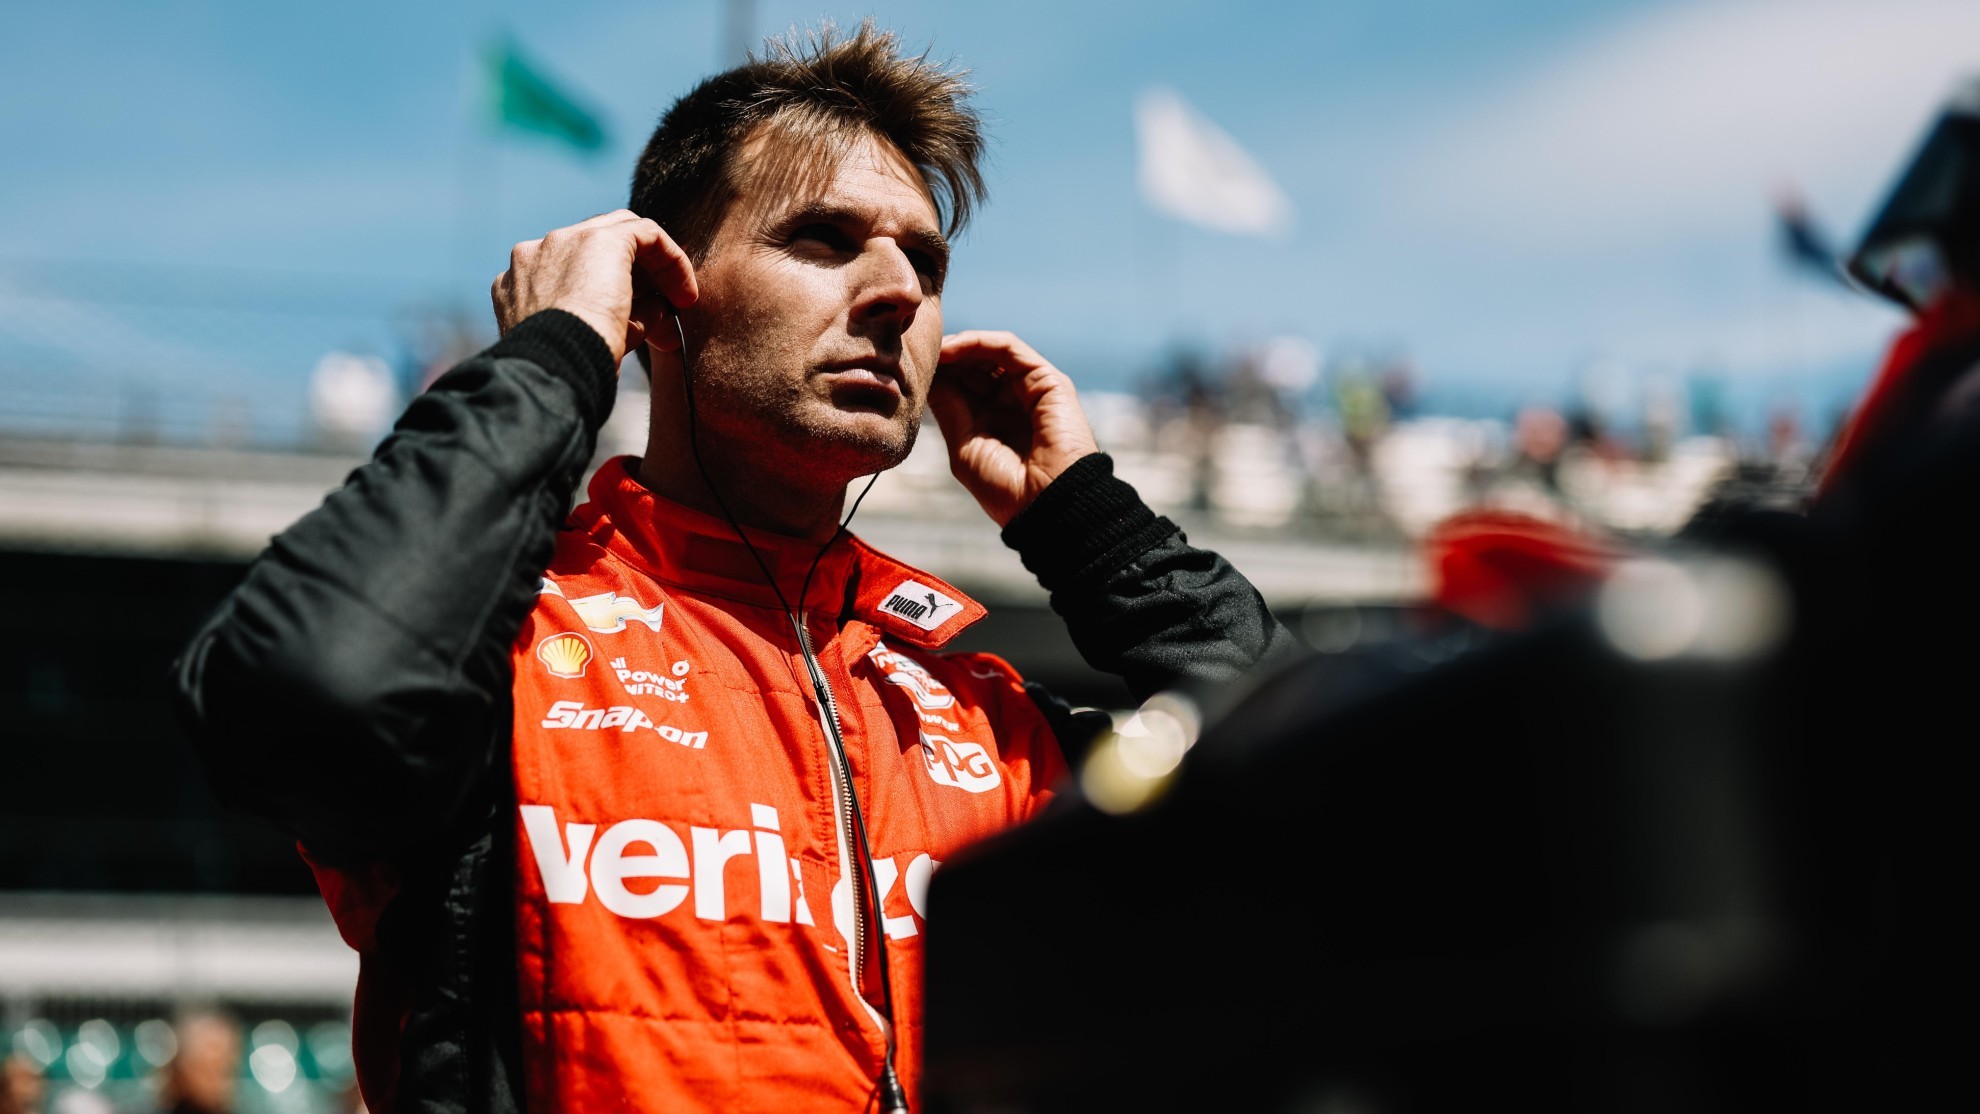 Will Power - IndyCar - Alex Palou - McLaren - Formula 1 - Toronto